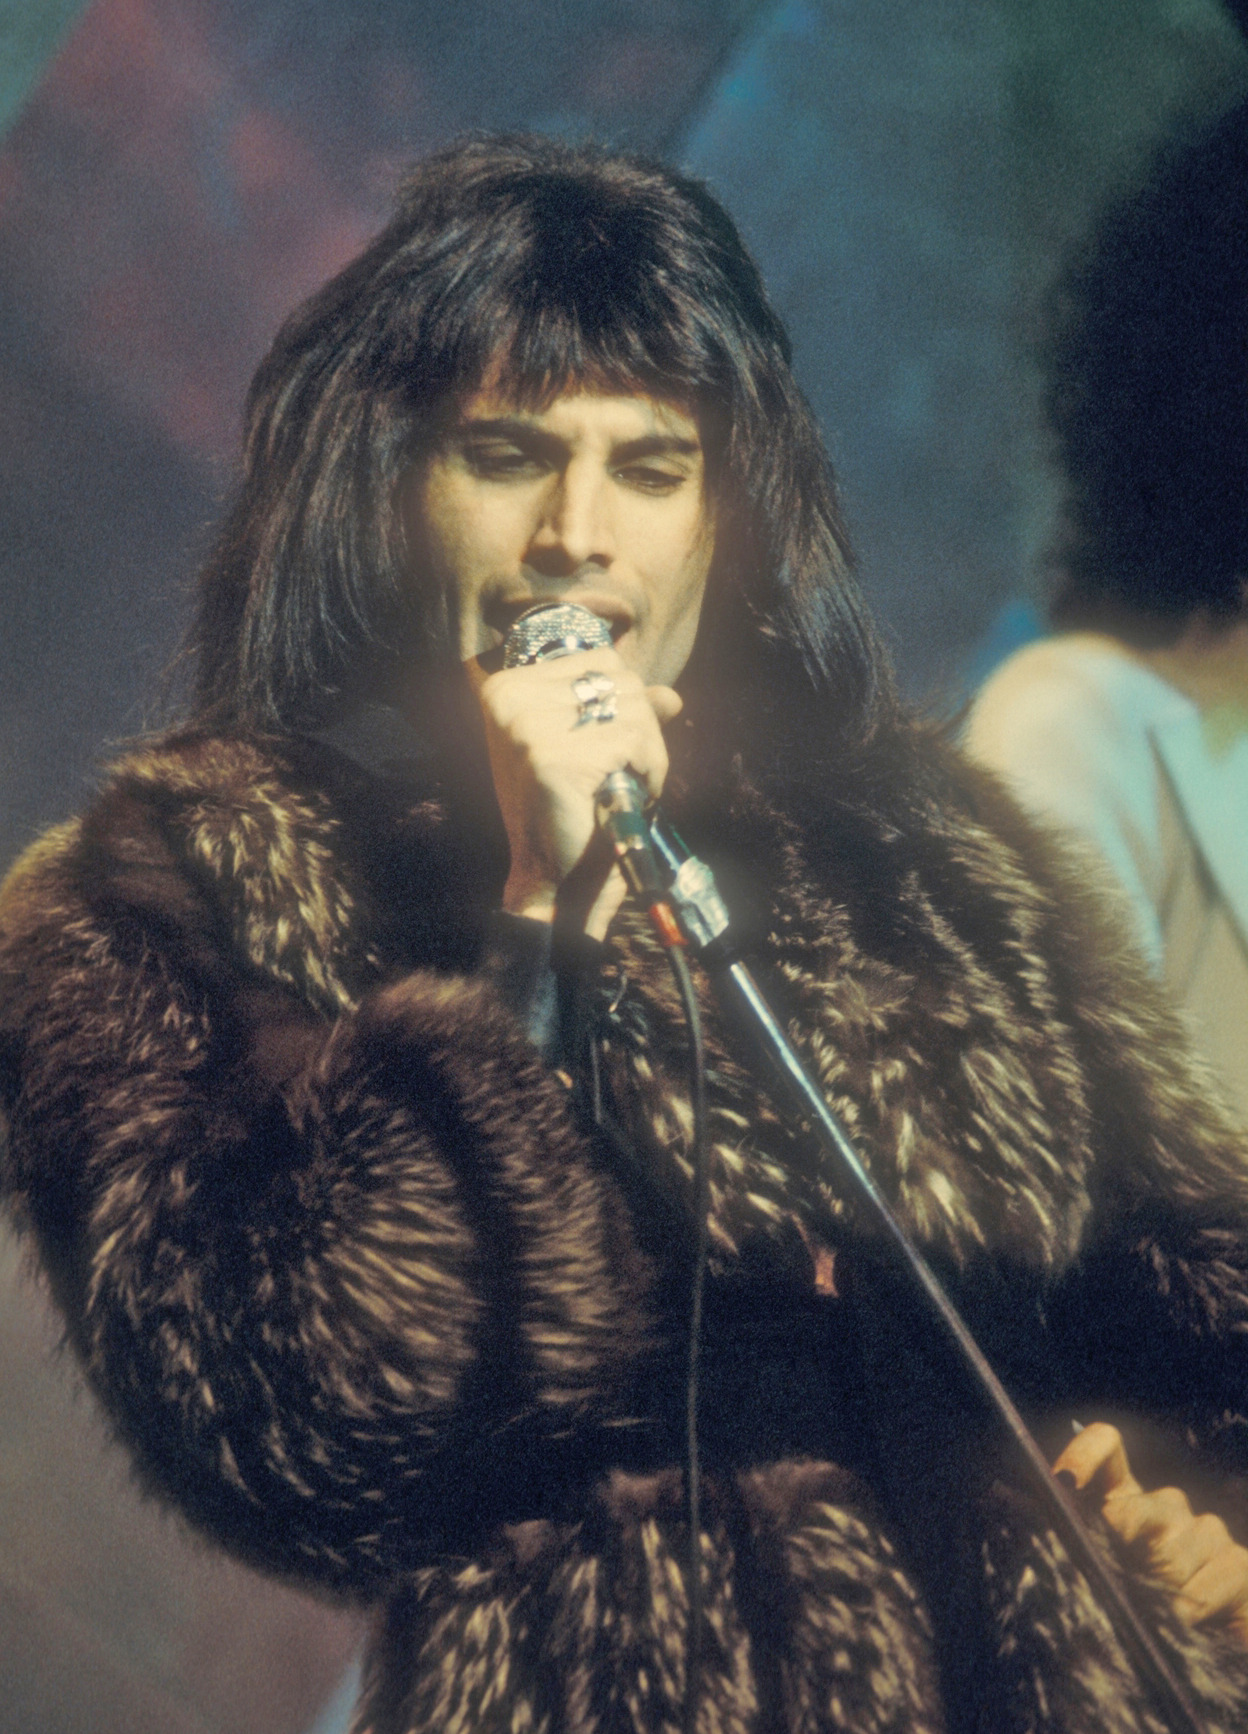 LETTER NUMBER THIRTEEN – Dear Freddie Mercury